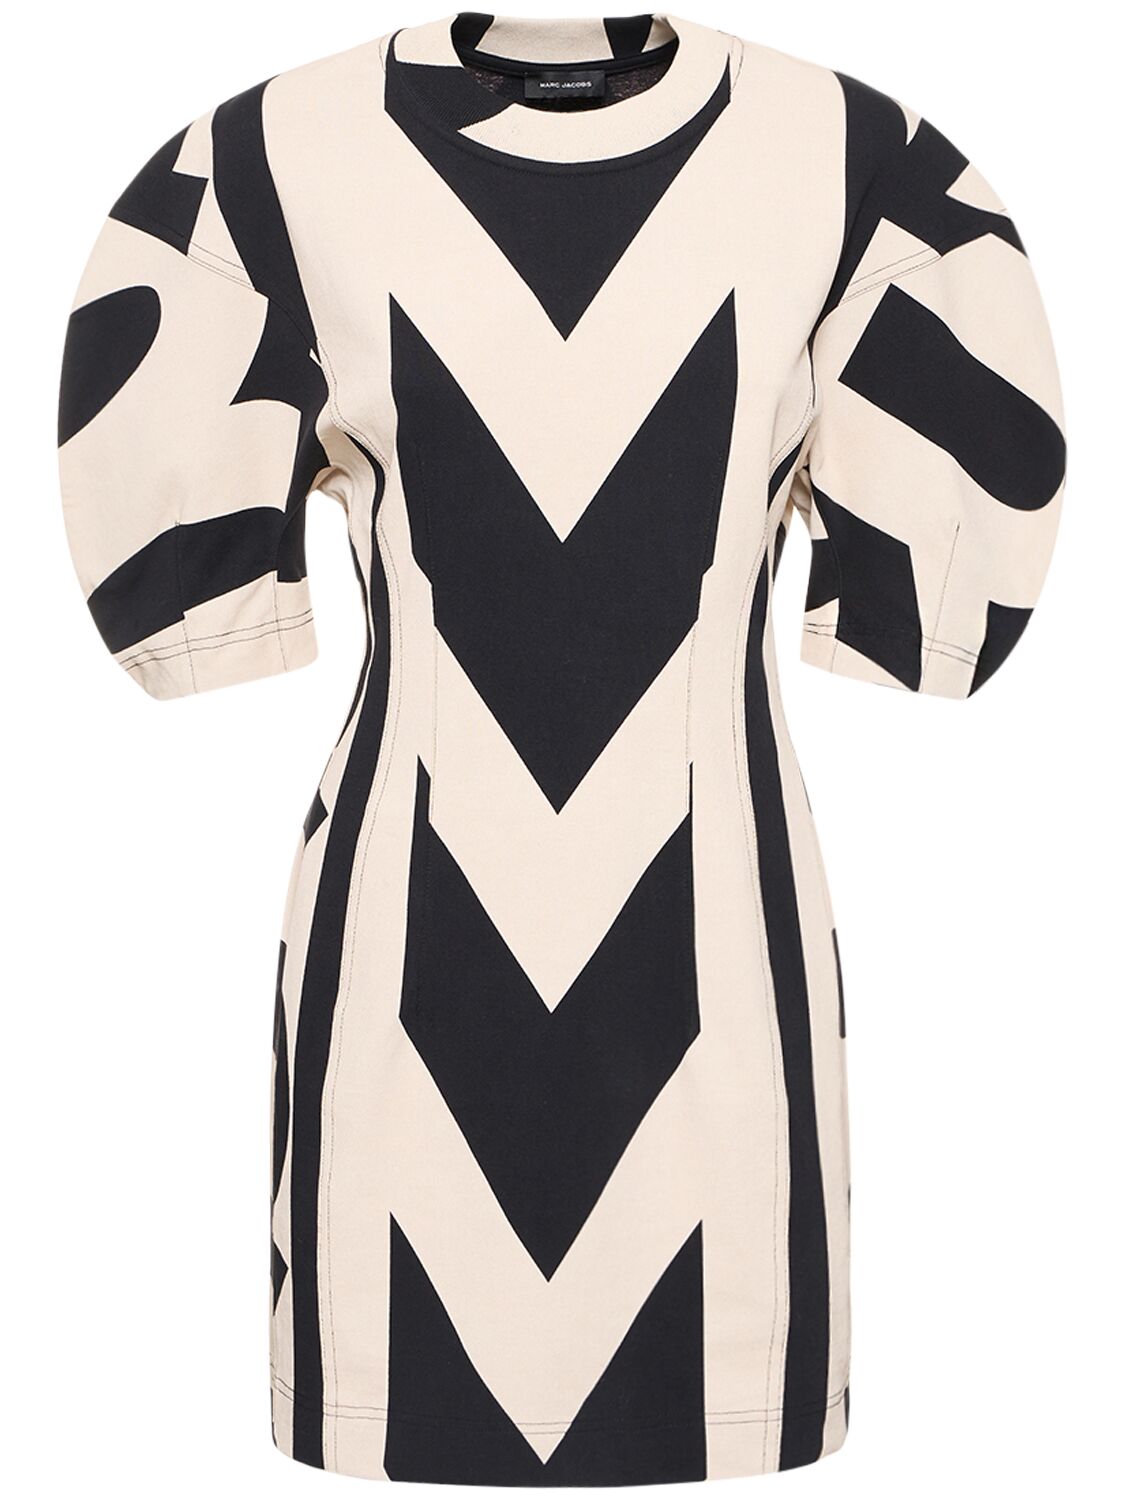 Marc Jacobs The Seamed Monogram Dress in Black/Ivory, Size Medium